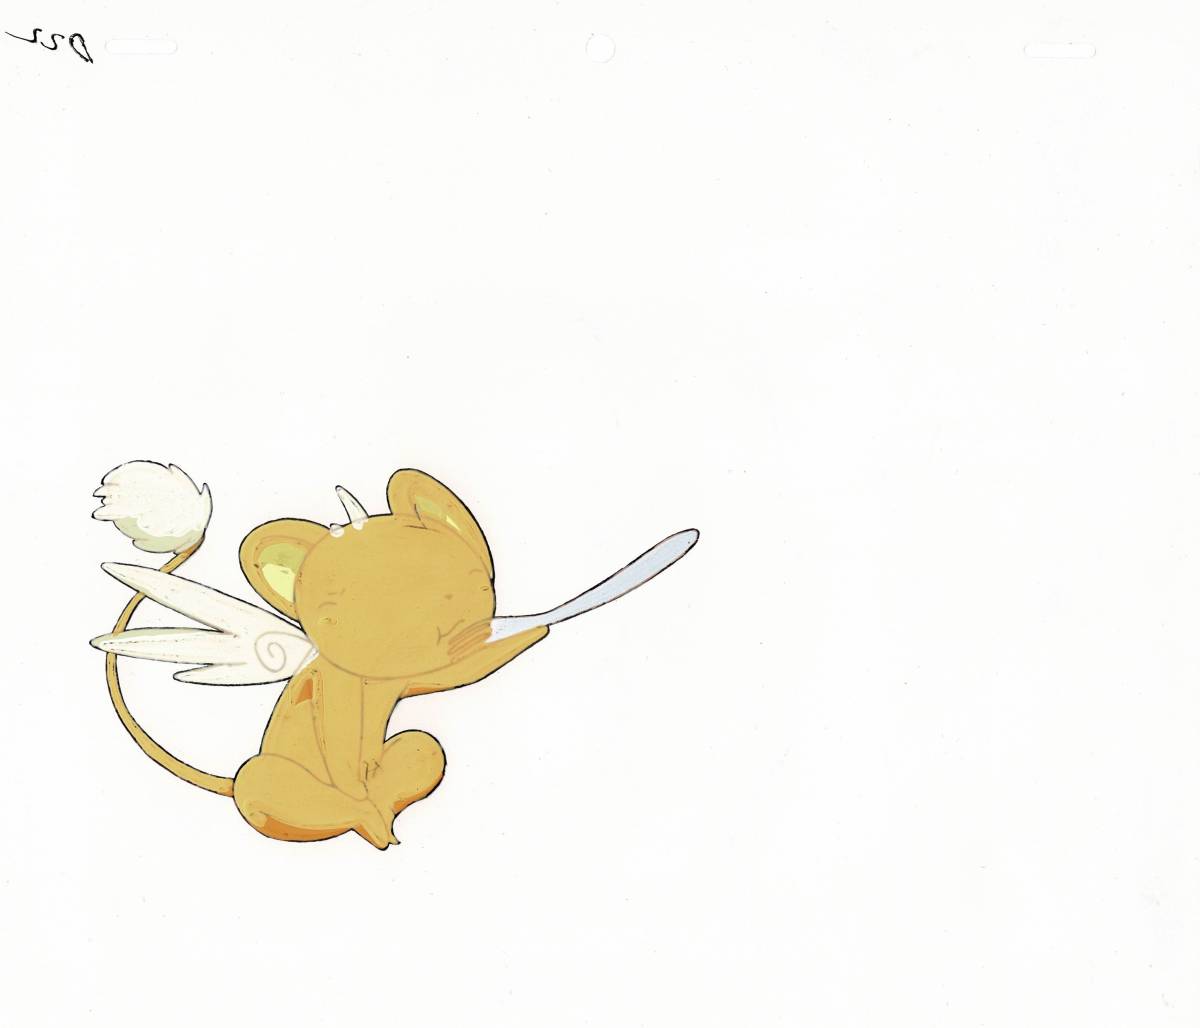  Cardcaptor Sakura kero Chan kerube Roth цифровая картинка анимация исходная картина CLAMP.. фирма Nakayoshi KC Deluxe грязь house [A302]